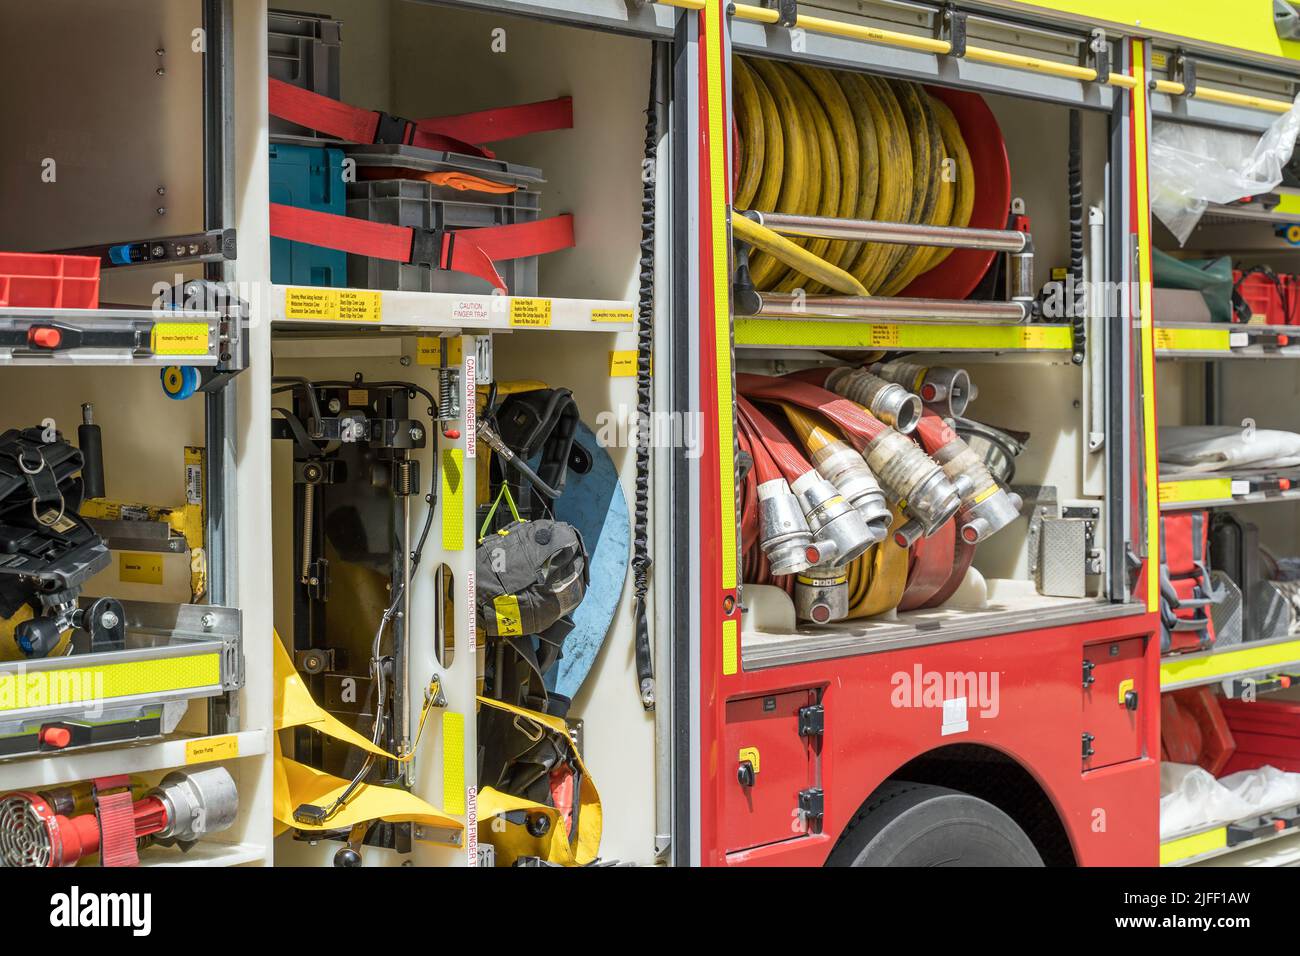 The equipment inside a London Fire Brigade fire engine. London Stock Photo